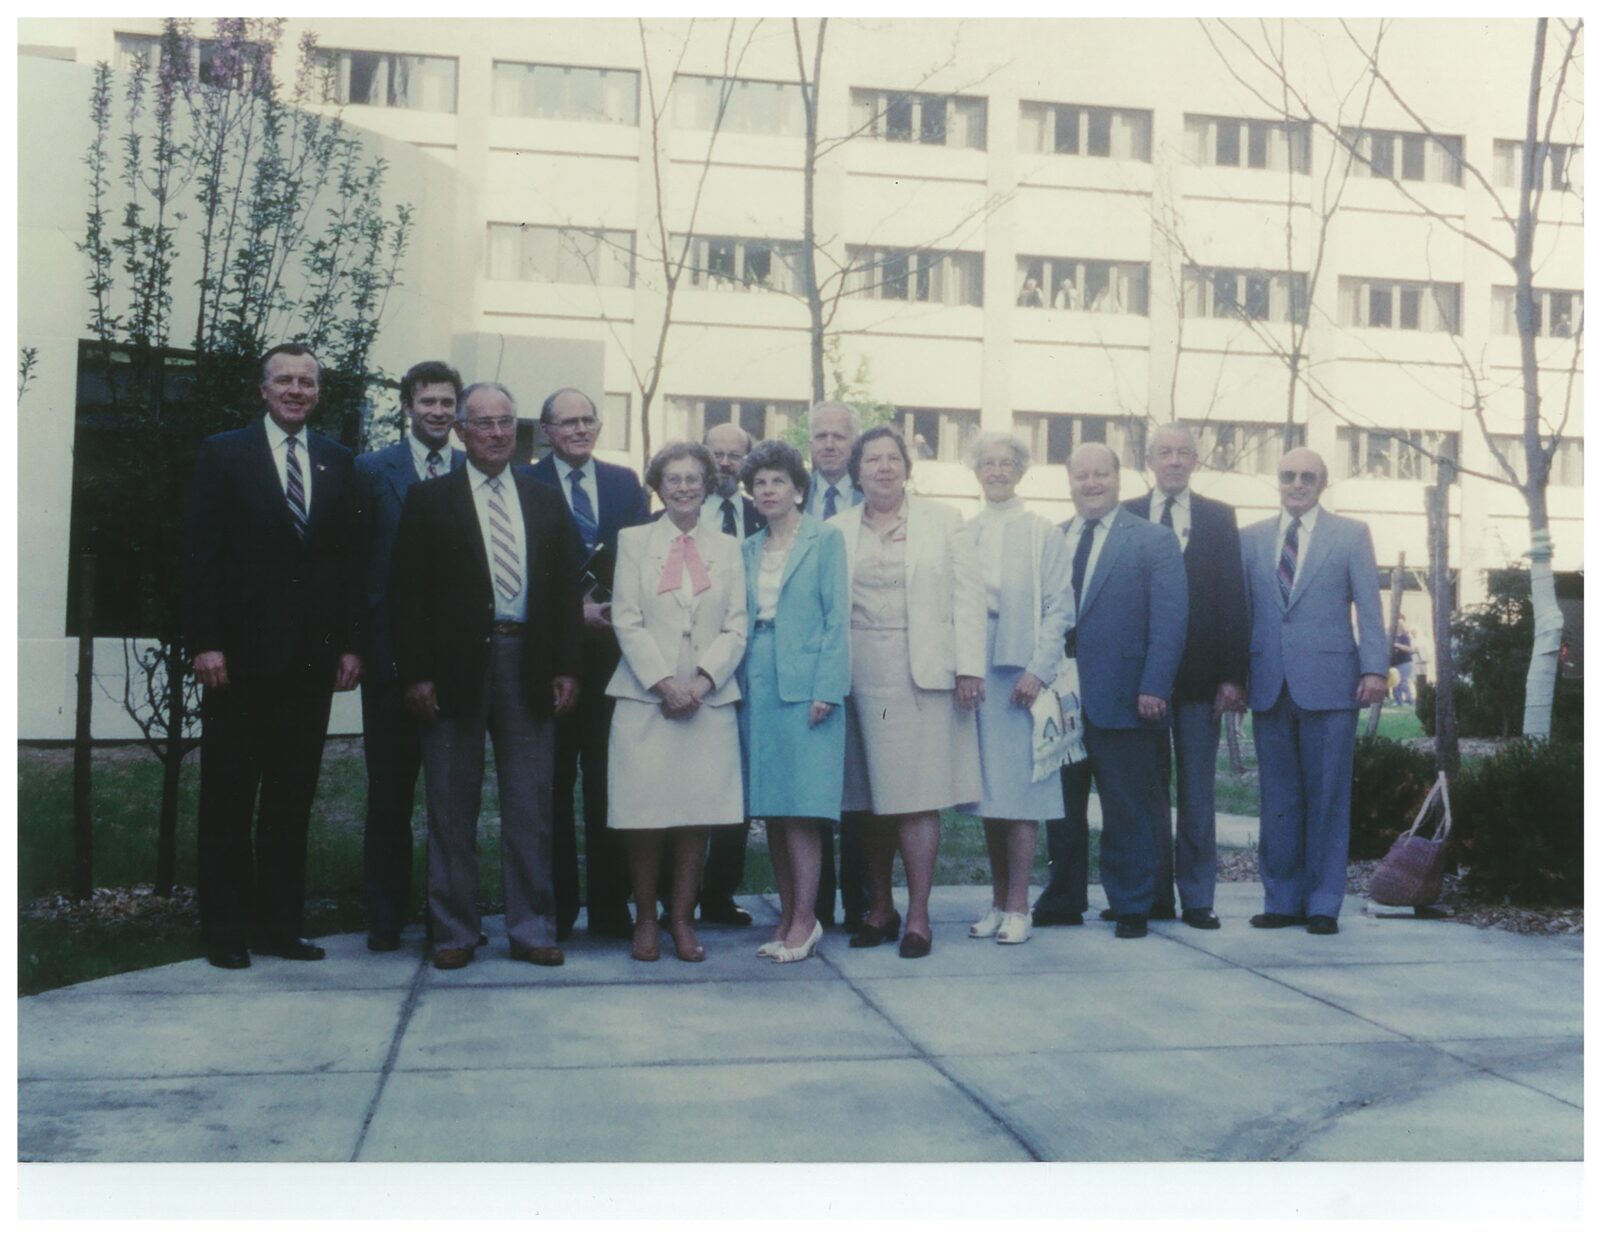 The Wesley Community Board of Directors Circa 1990s